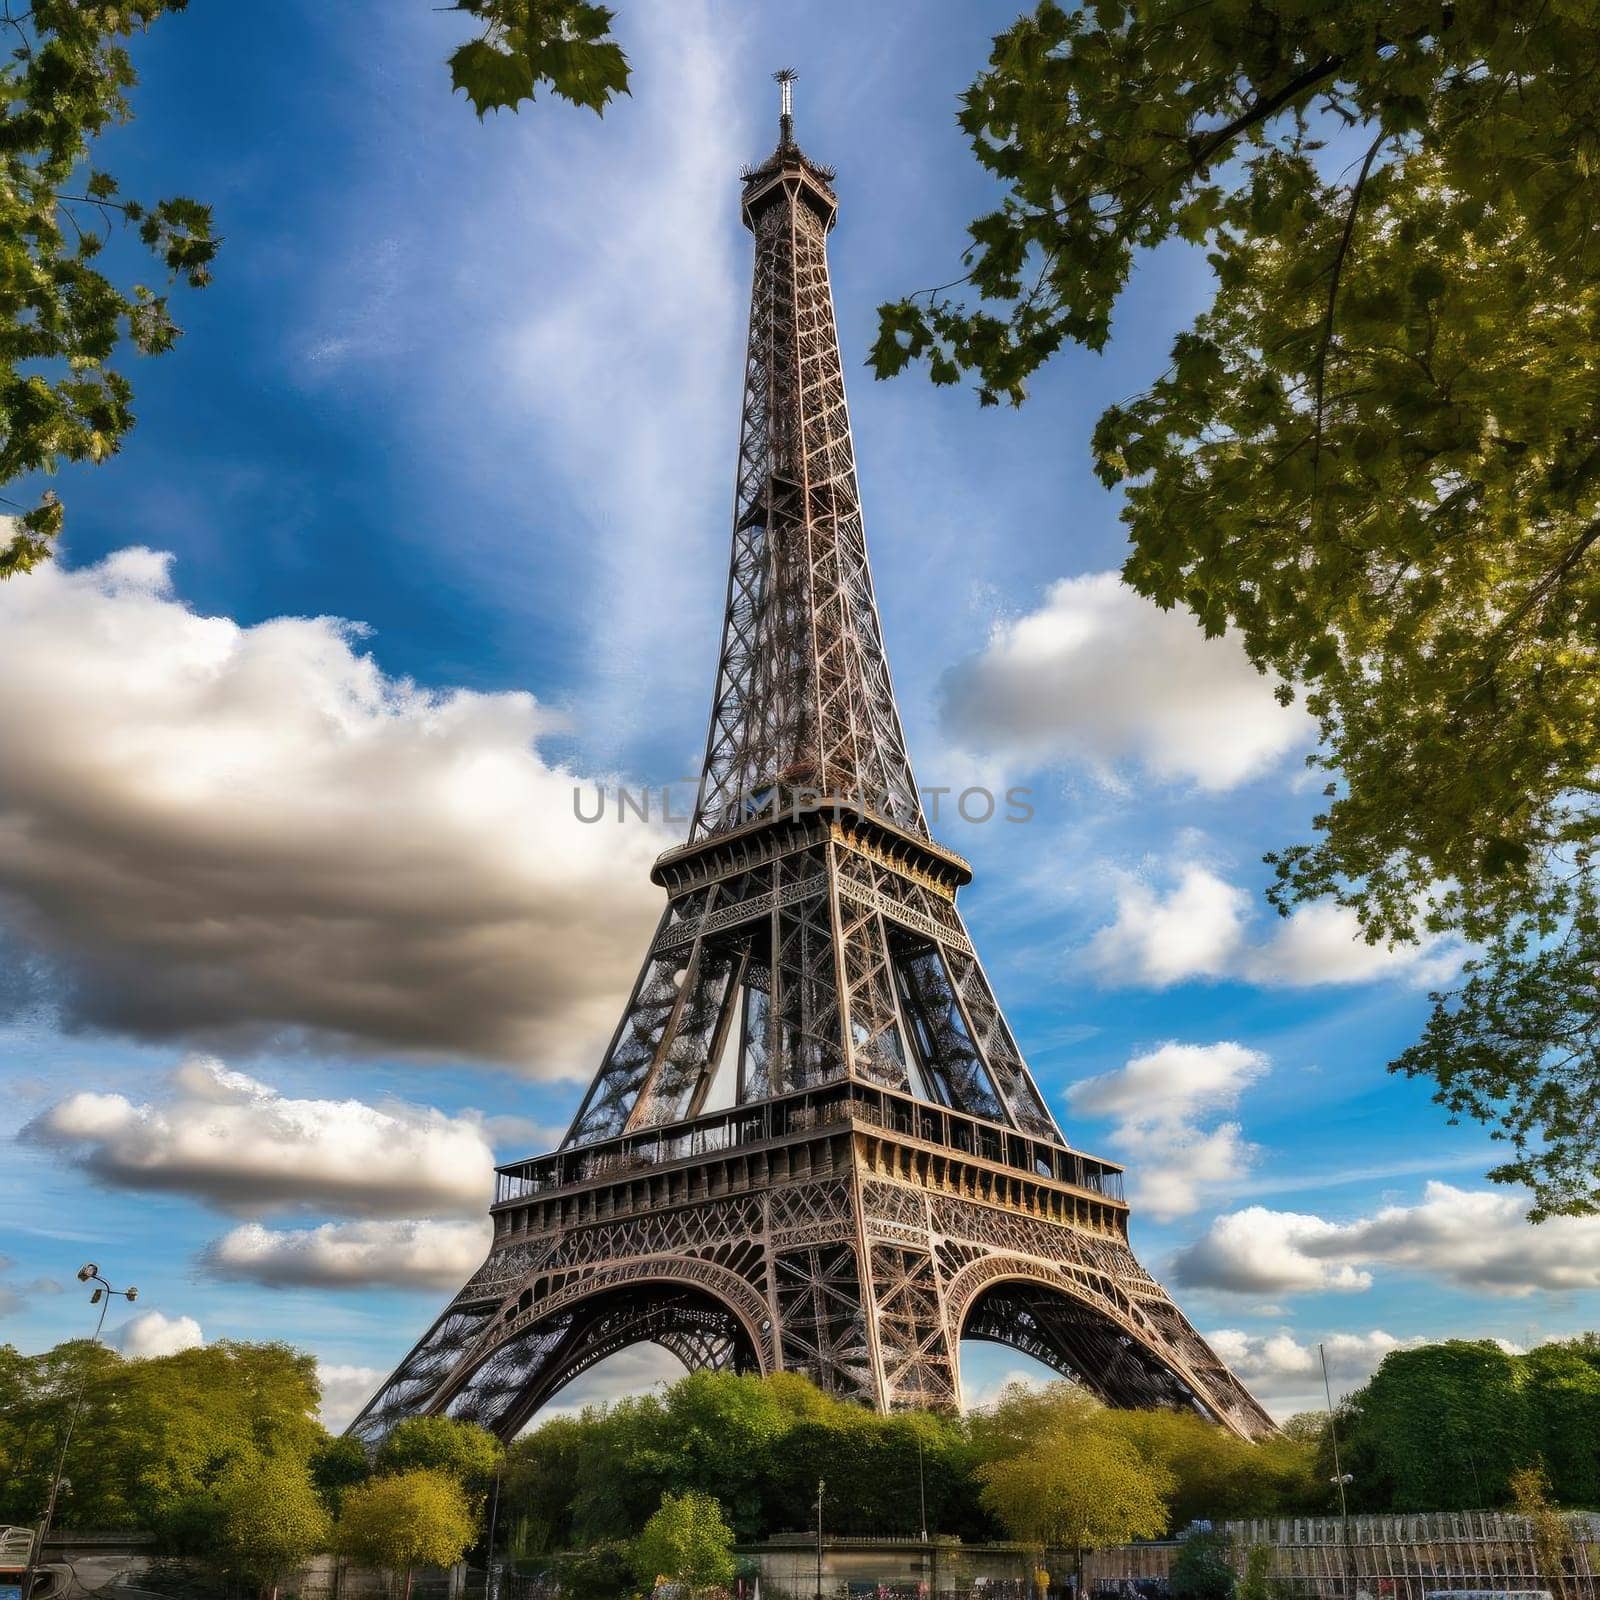 The Eiffel Tower in Paris, France by eduardobellotto